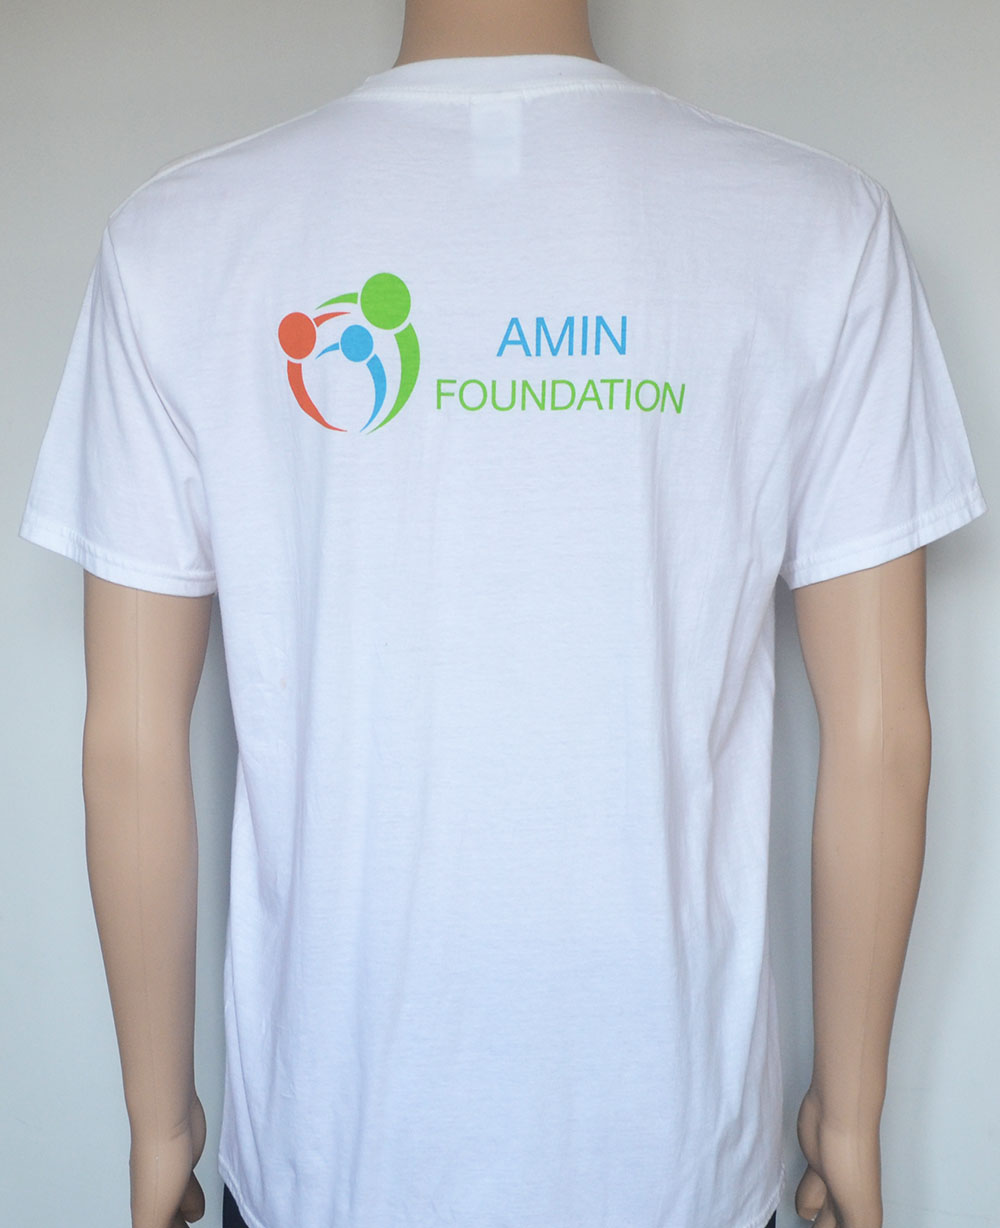 Custom white cotton t-shirts for foundation, public benefit organization tees